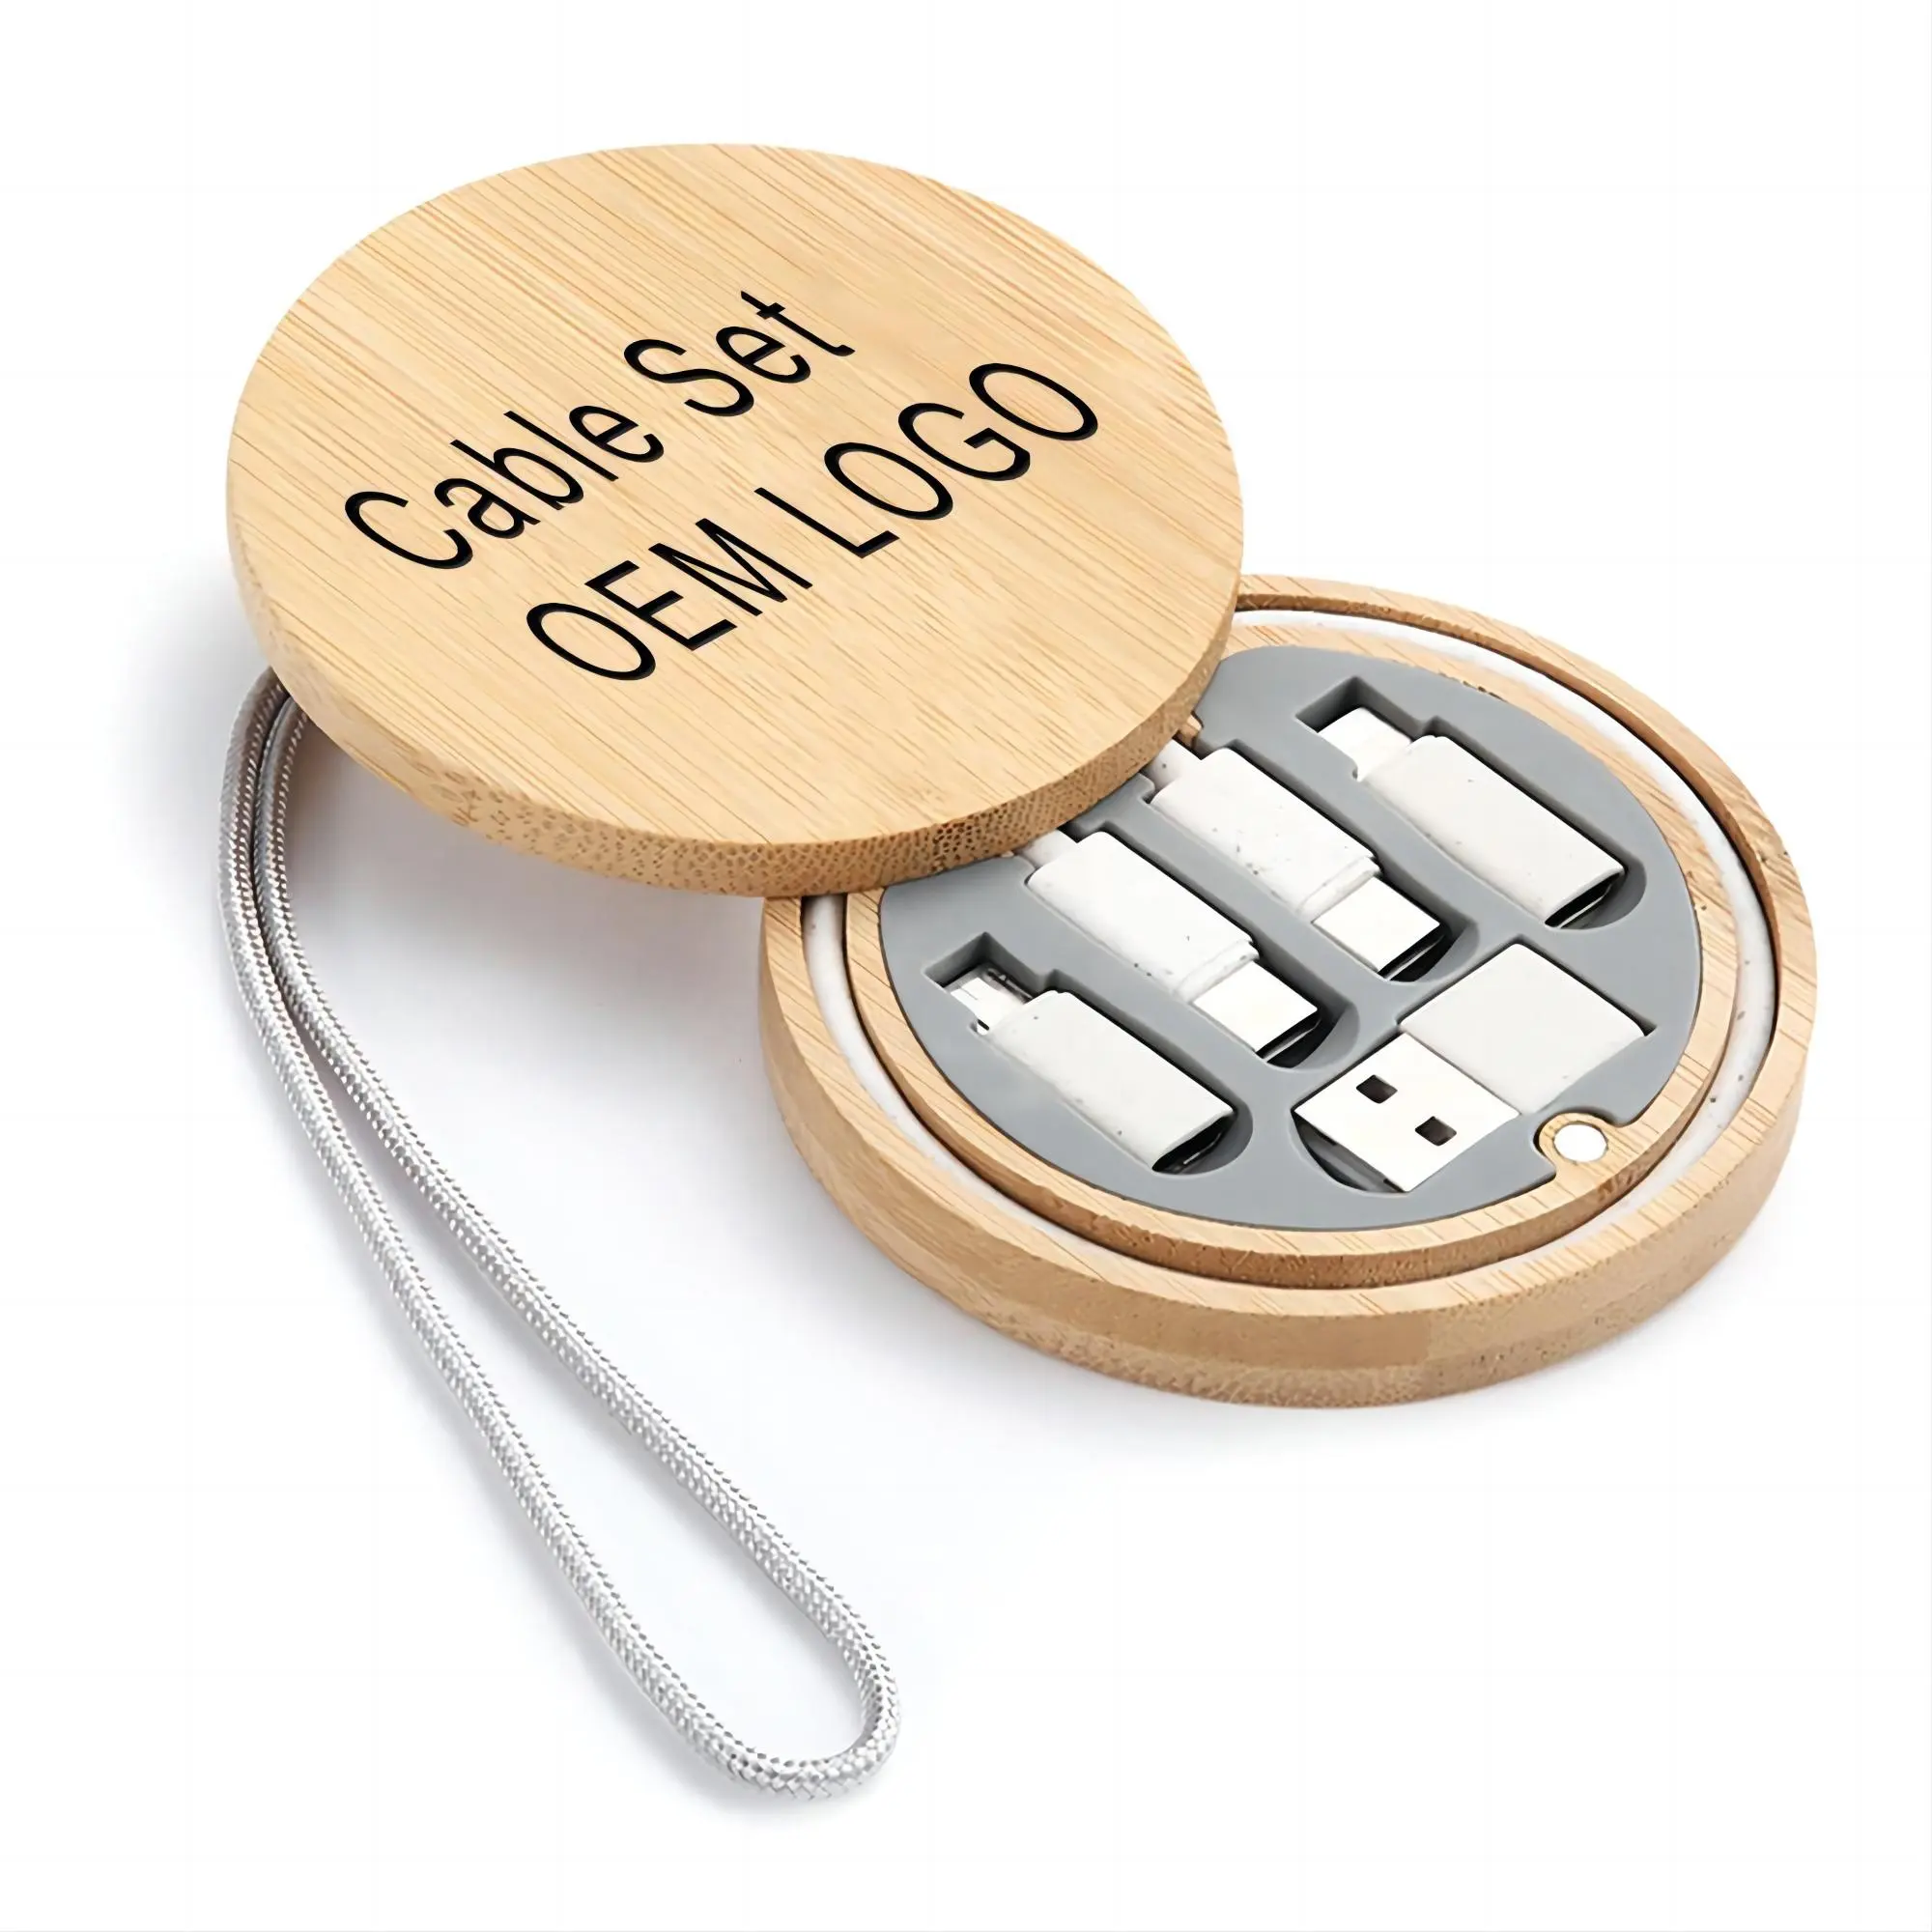 Logotipo personalizado 60W Micro Usb C Tipo 3 en 1 Multi Cable Caja de almacenamiento de carga rápida Mini cargador de teléfono Datos Juego de cables de Bambú